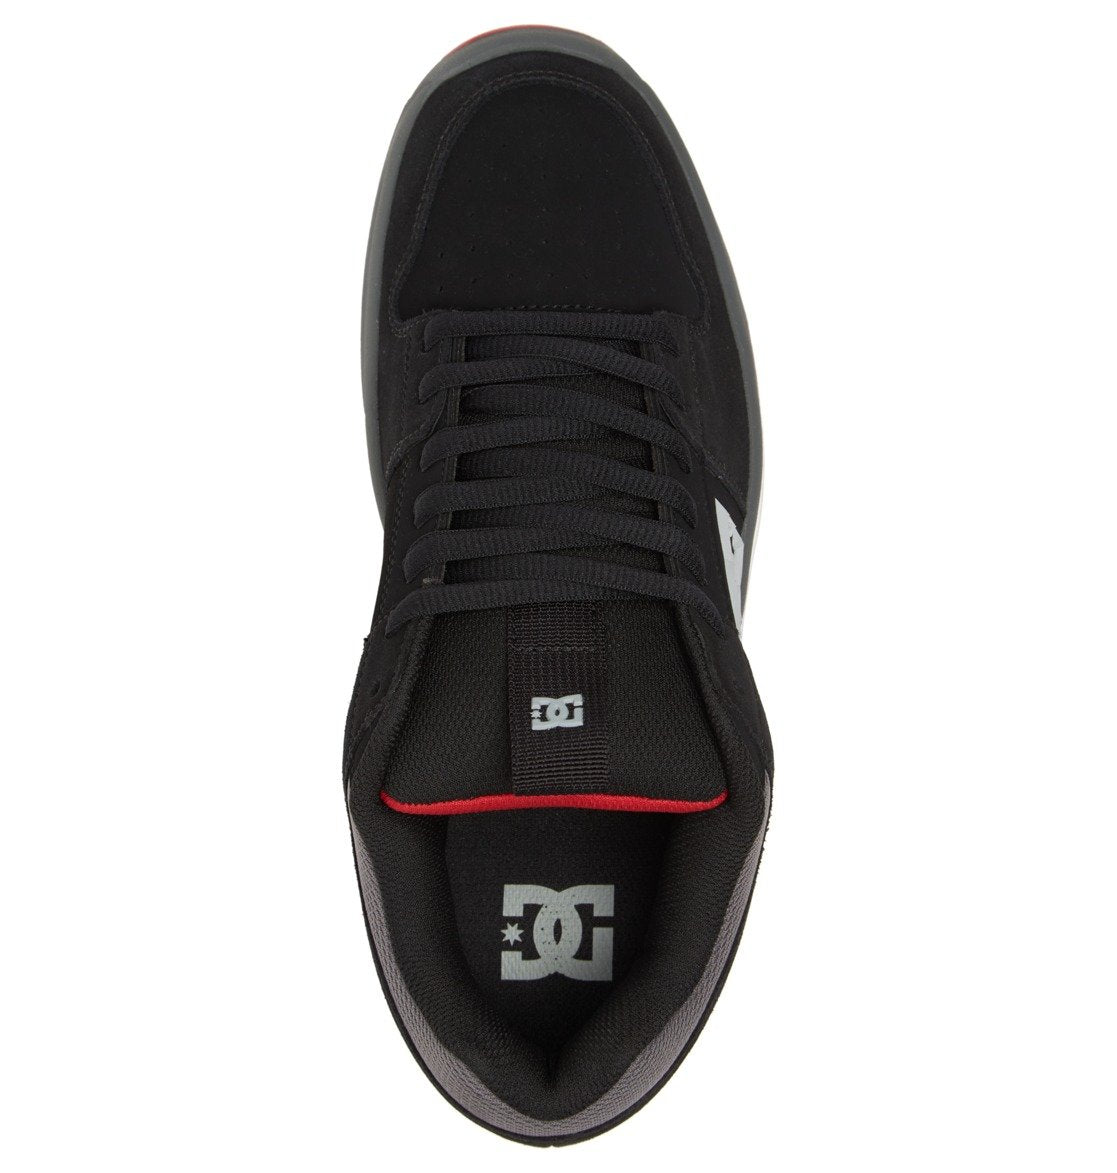 DC Shoes Men's Women's Unisex Lynx Zero Low Top Skateboarding Shoes Black/Grey/Gray/Red Top